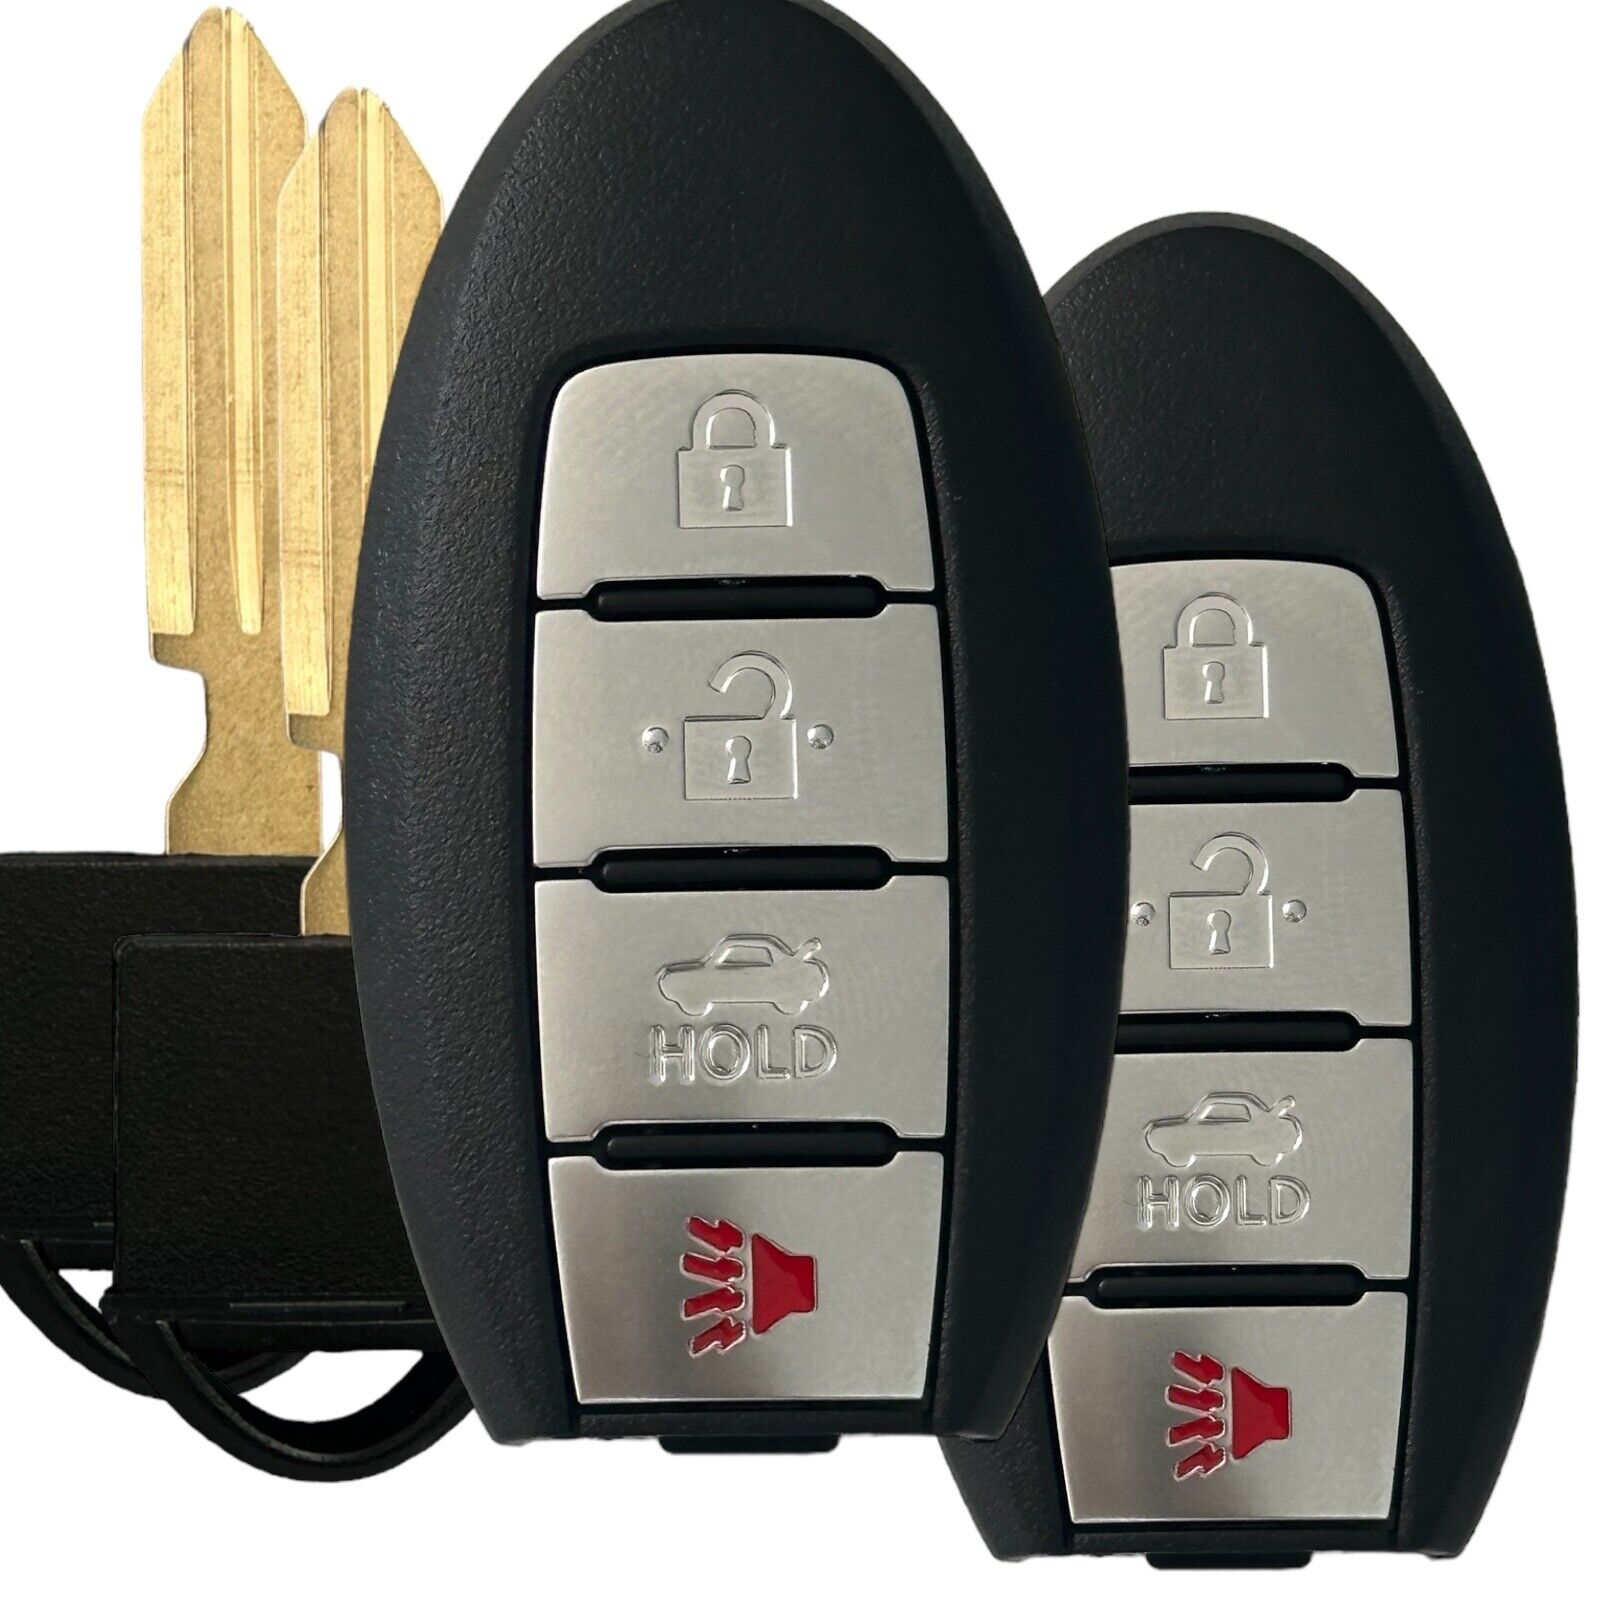 2 For KR55WK48903 Infiniti G37 Keyless Entry Smart Prox Remote Car Key Fob